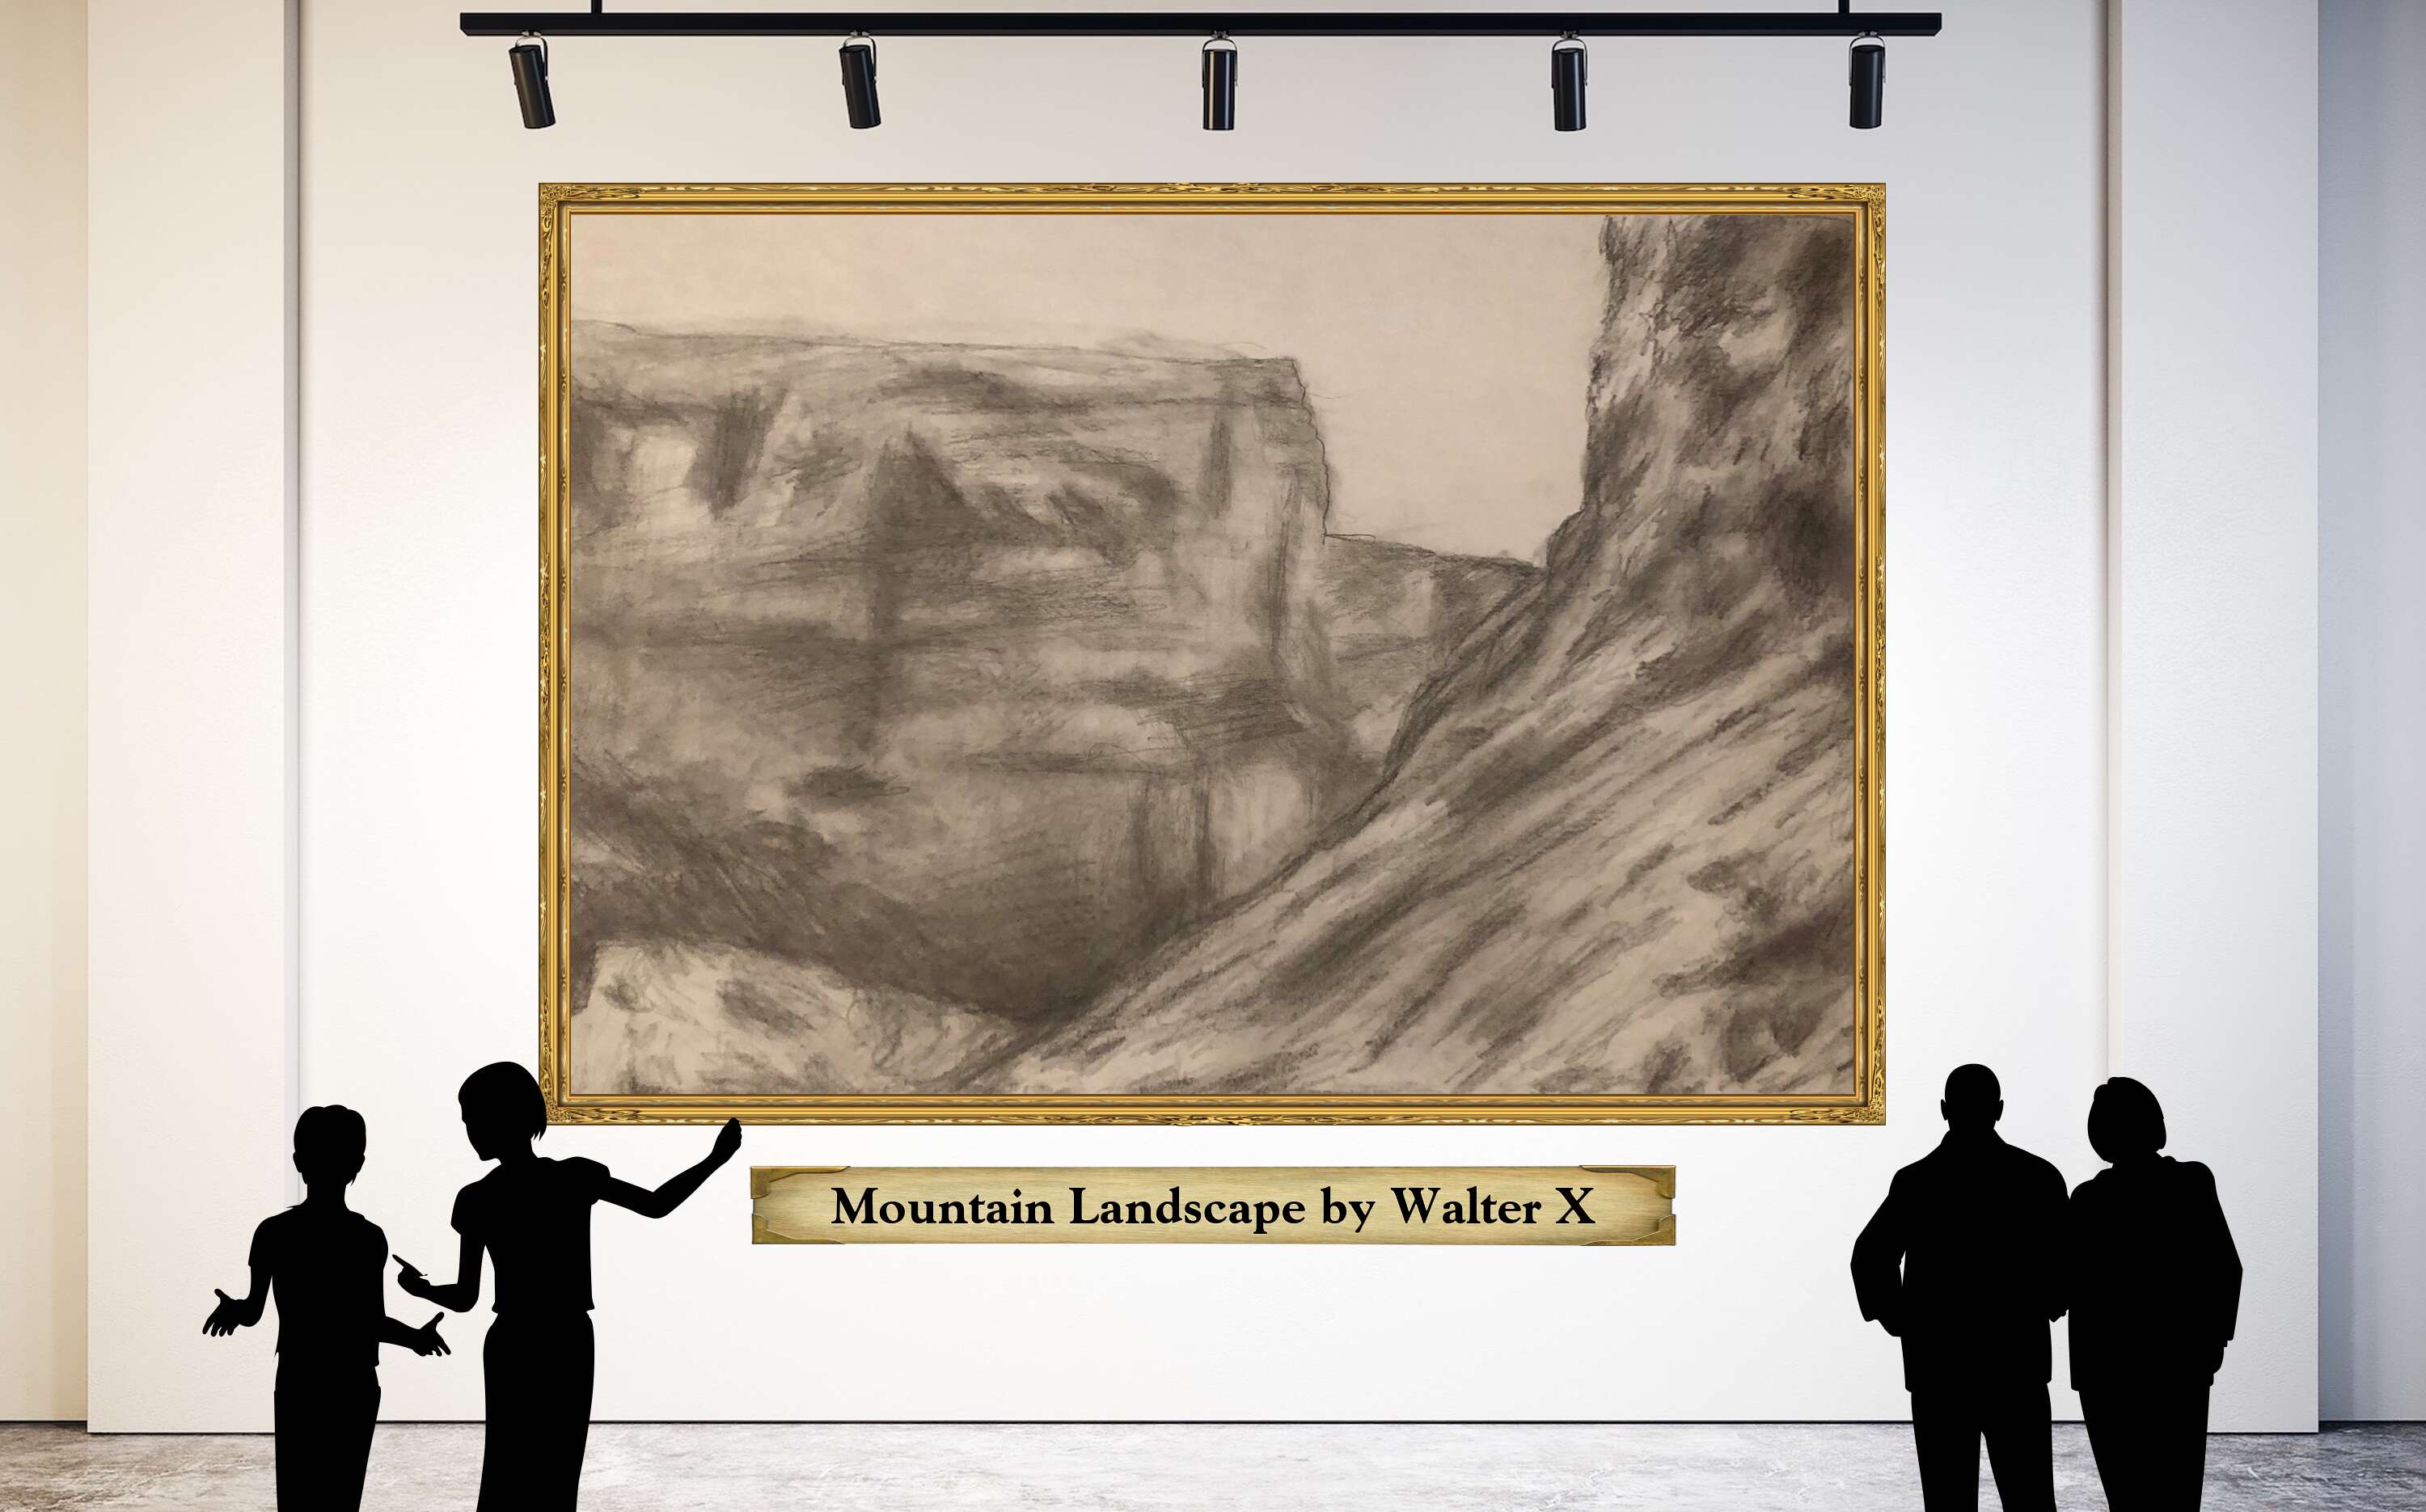 Mountain Landscape by Walter X